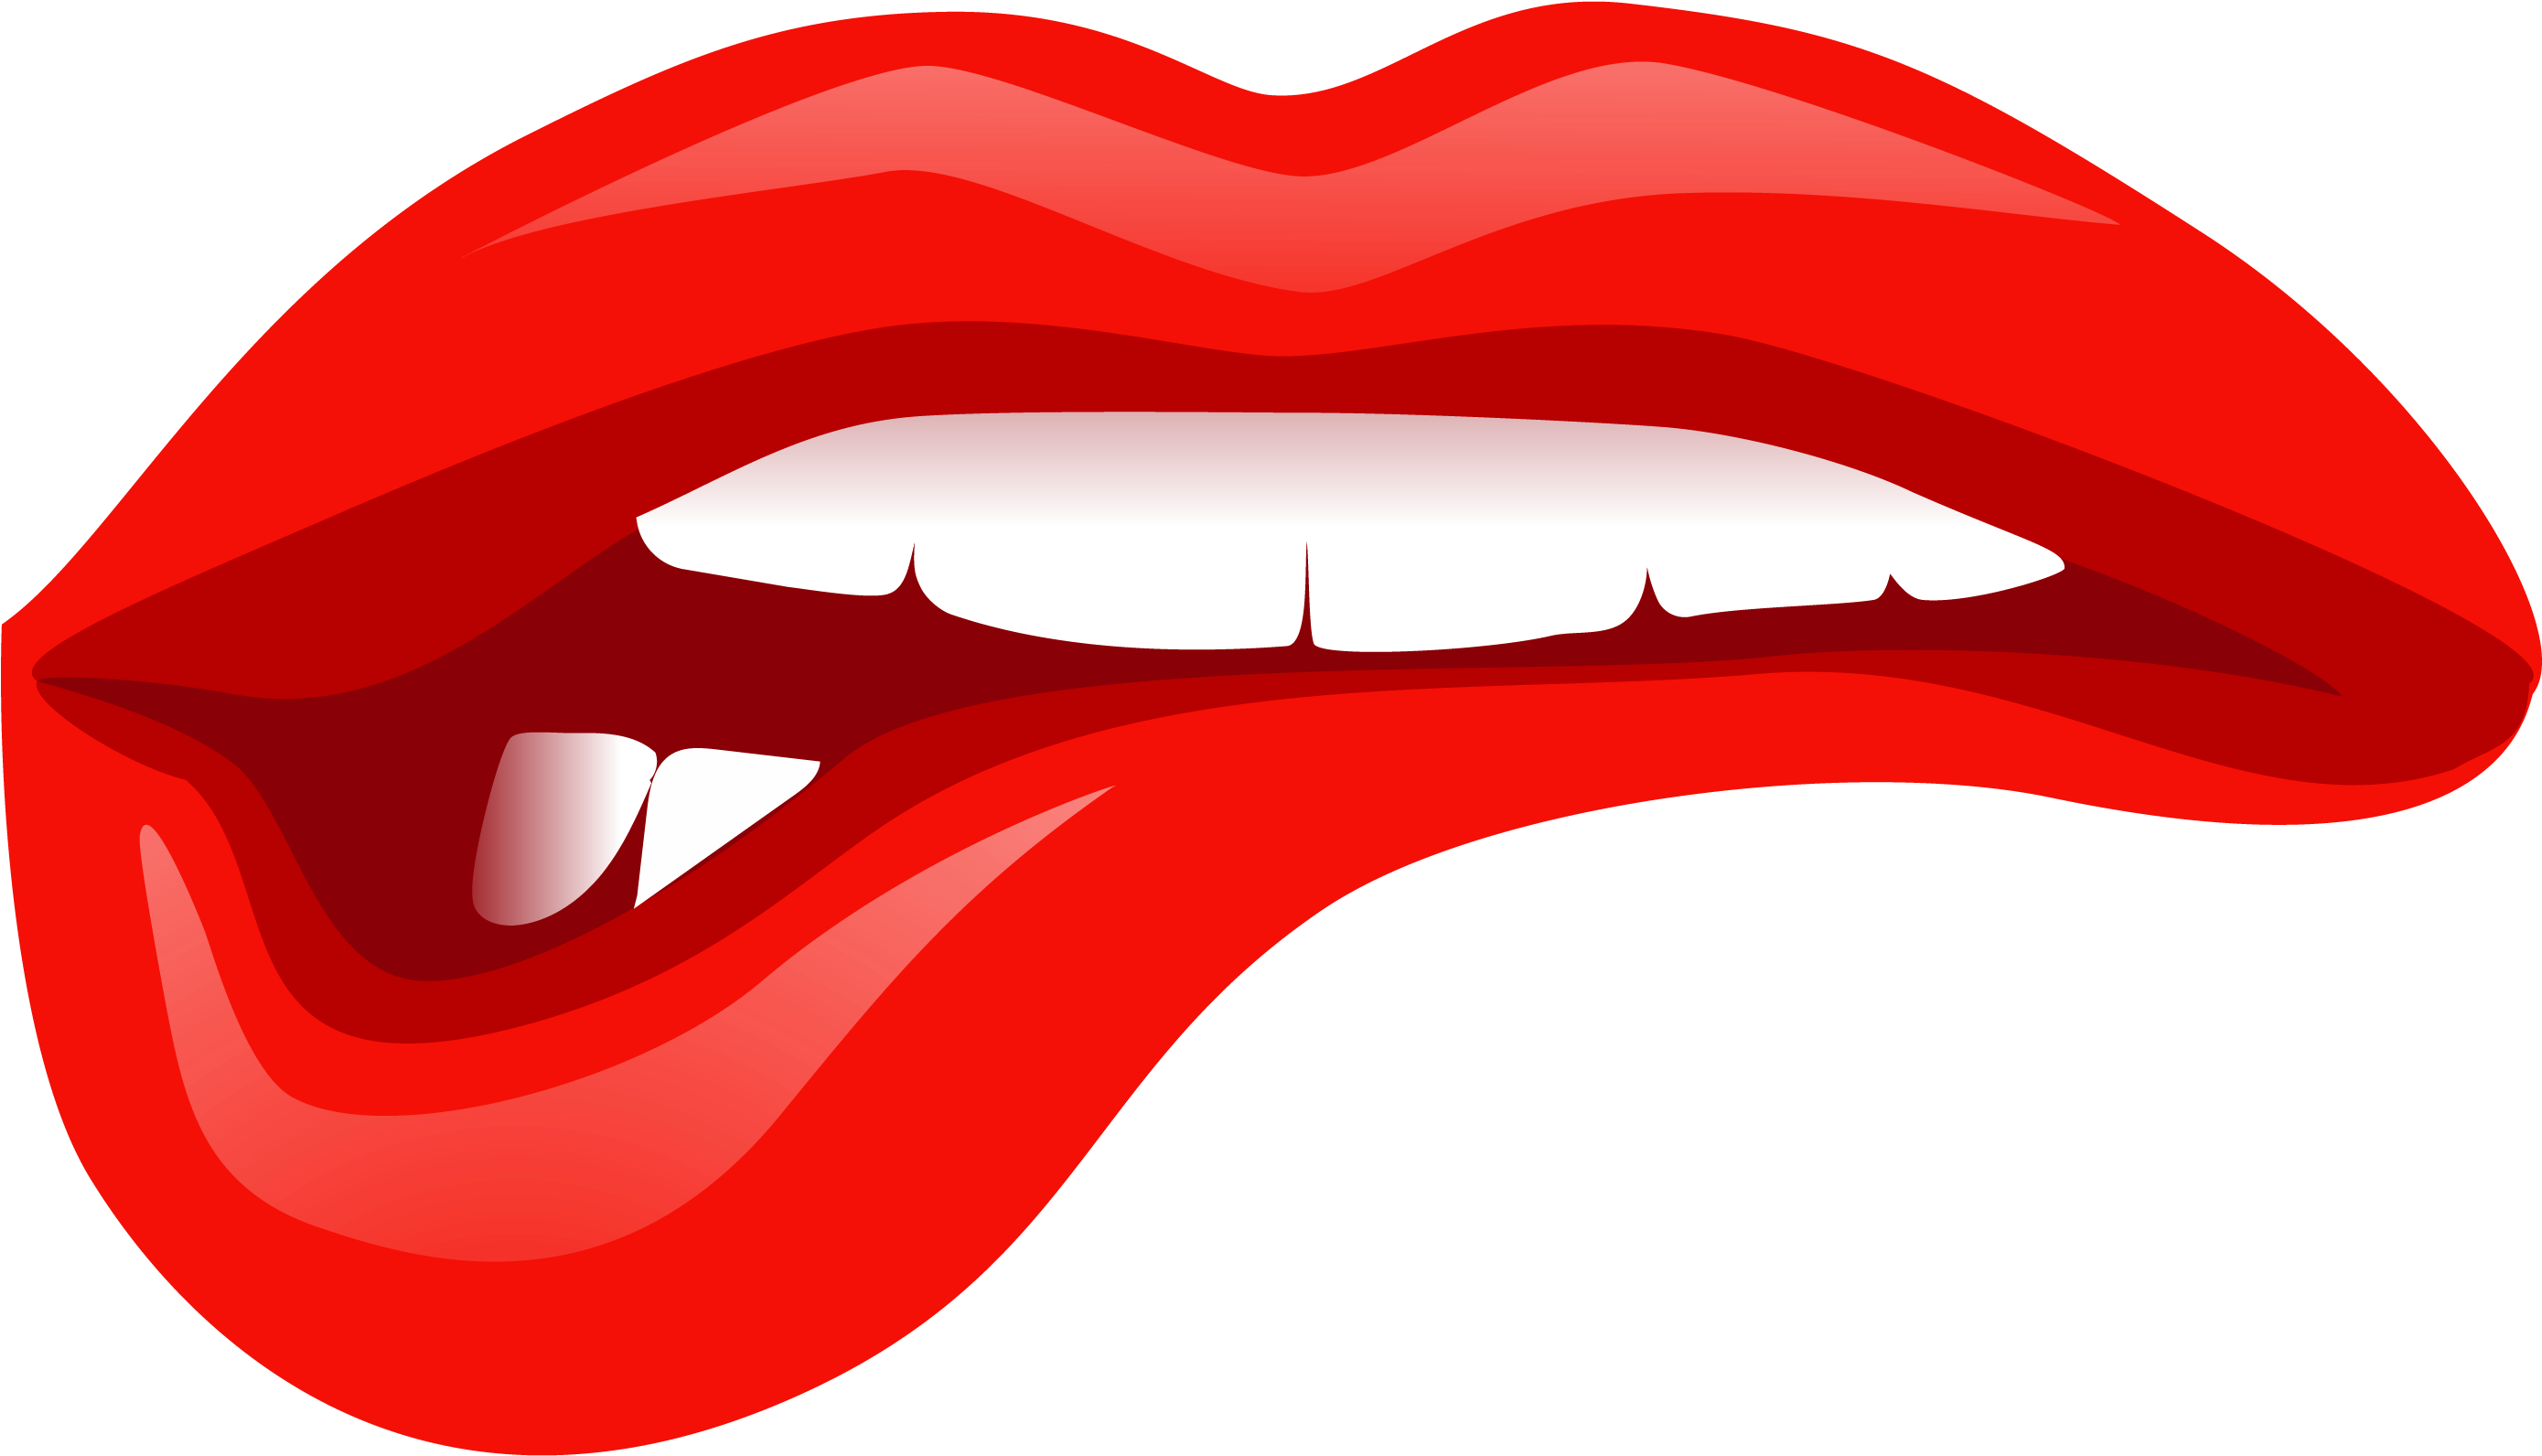 Lips Lip Balm Portable Network Graphics Image Clip Art Lips Png